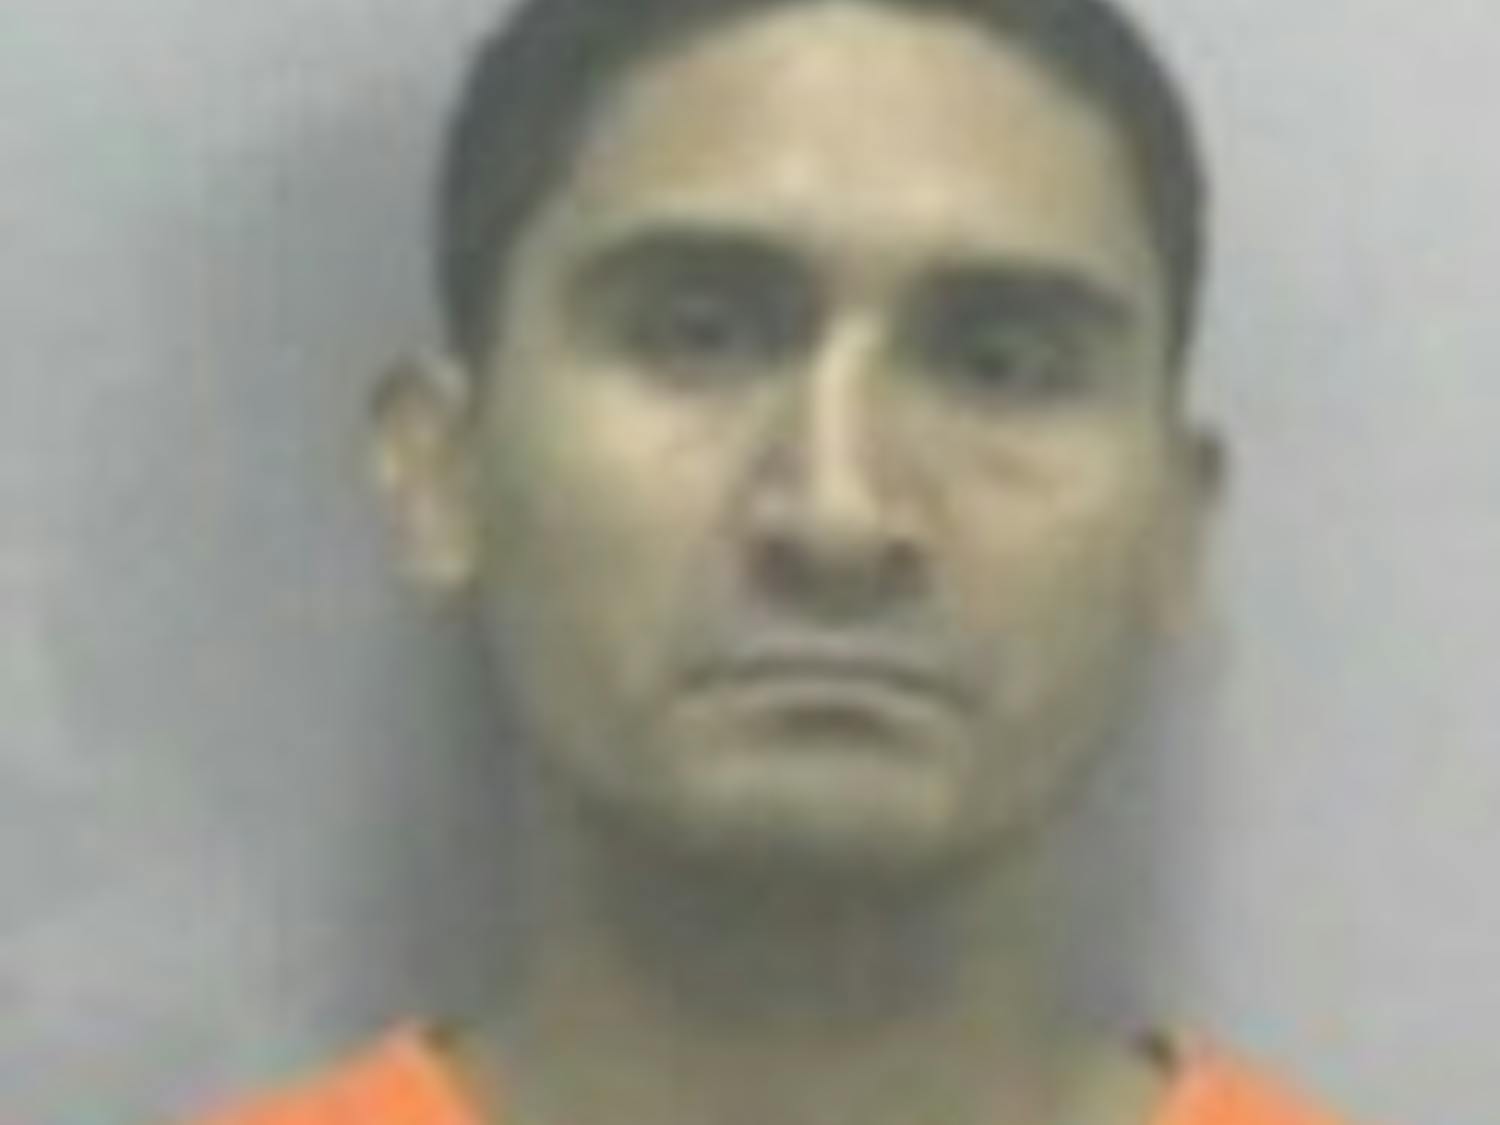 West Virginia man arrested for rape  